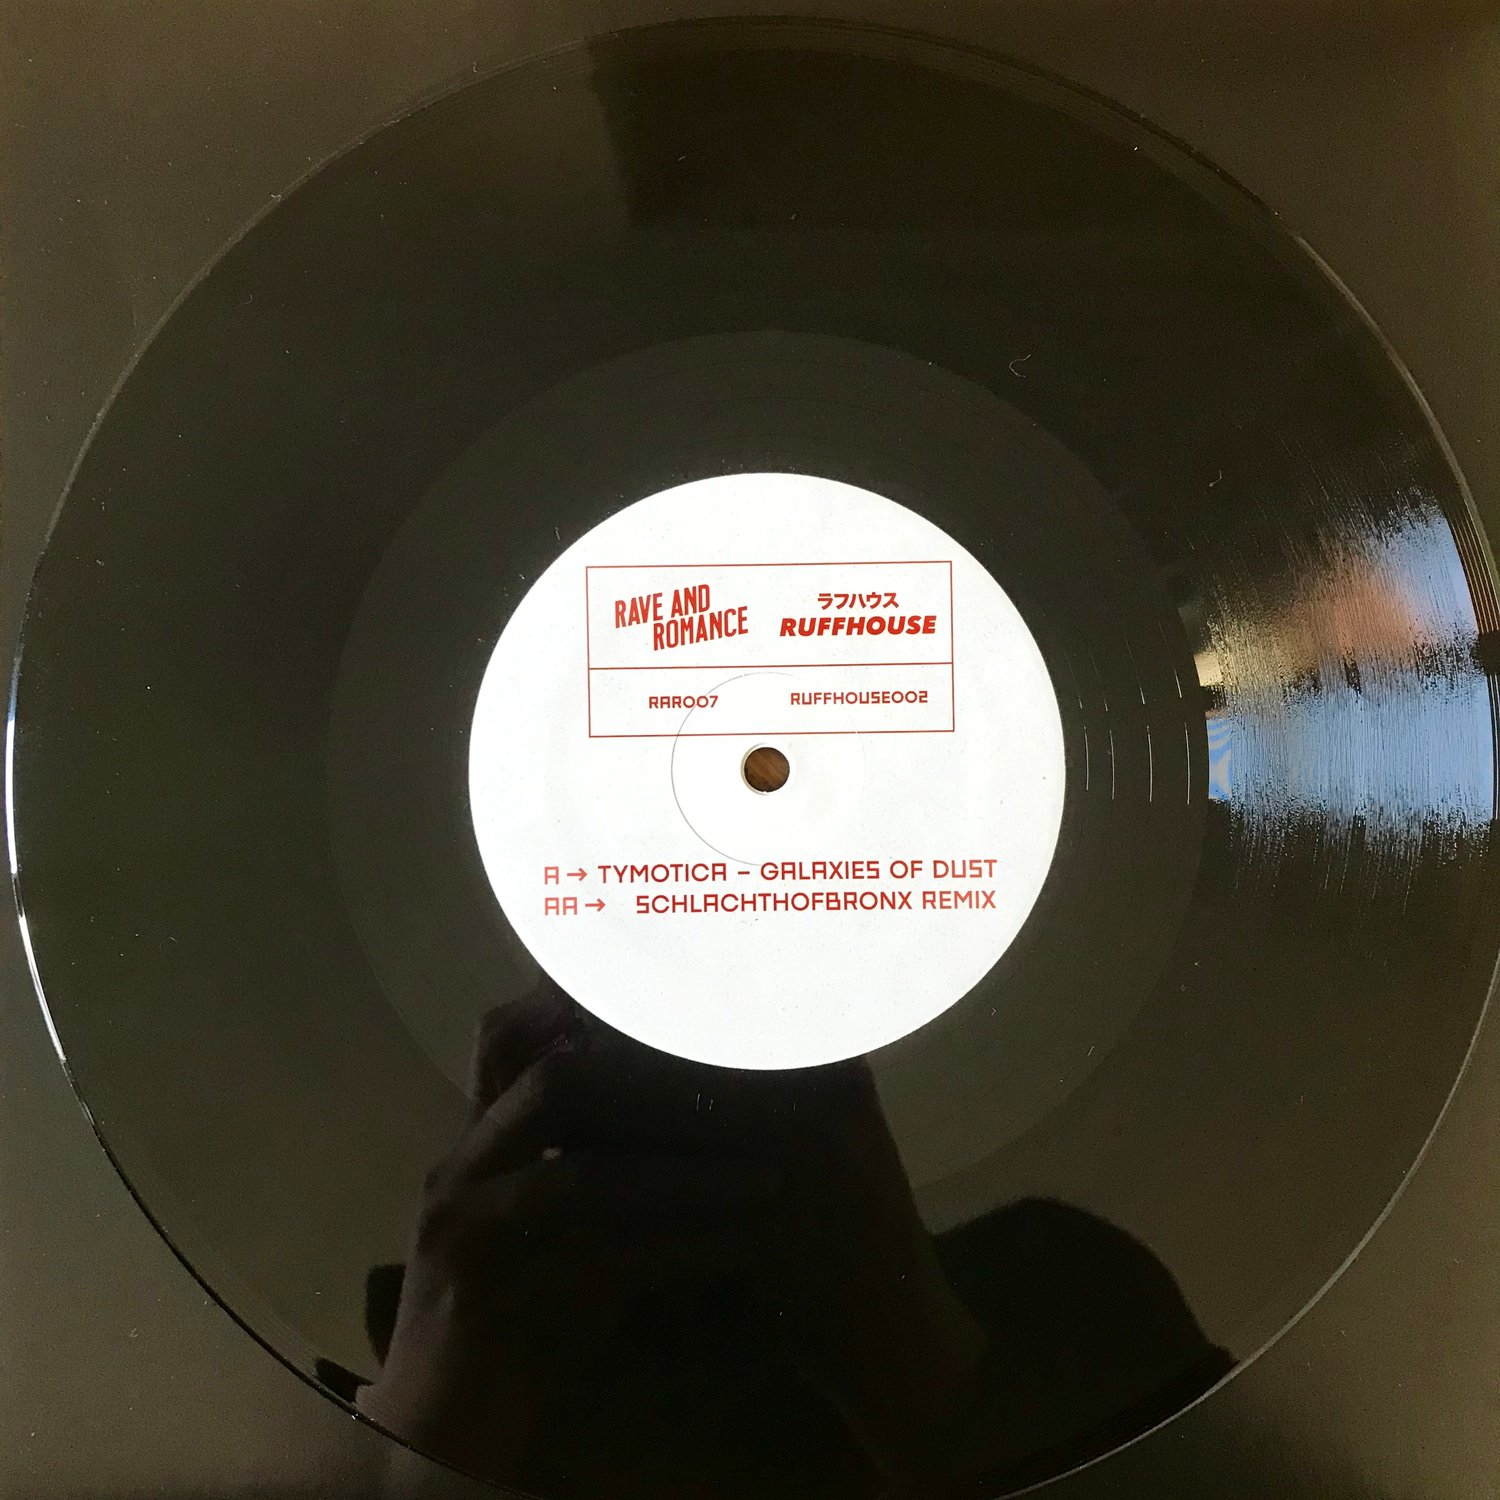 Image of Tymotica - Galaxies of Dust (+Schlachthofbronx Remix) - 10" Vinyl (RAR007)